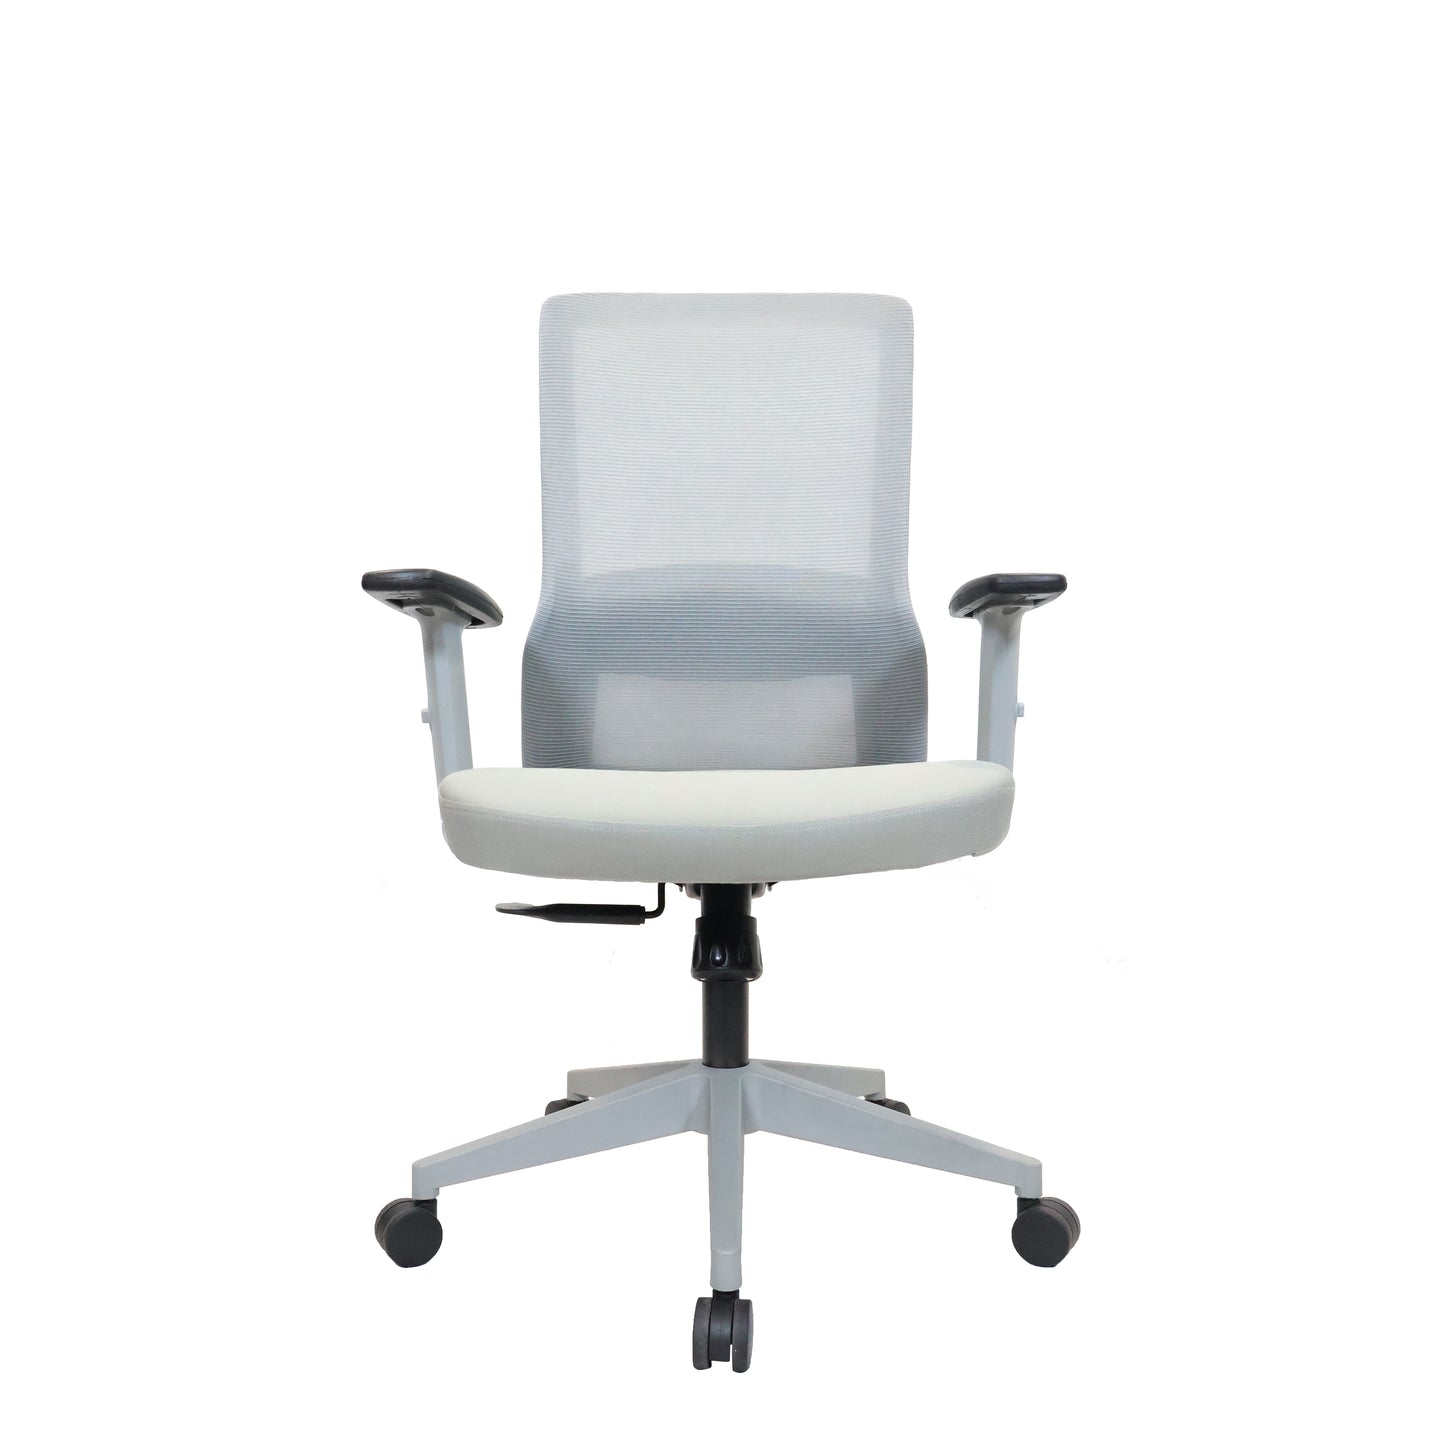 Evo Medium Back Chair Workstation chairs - makemychairs